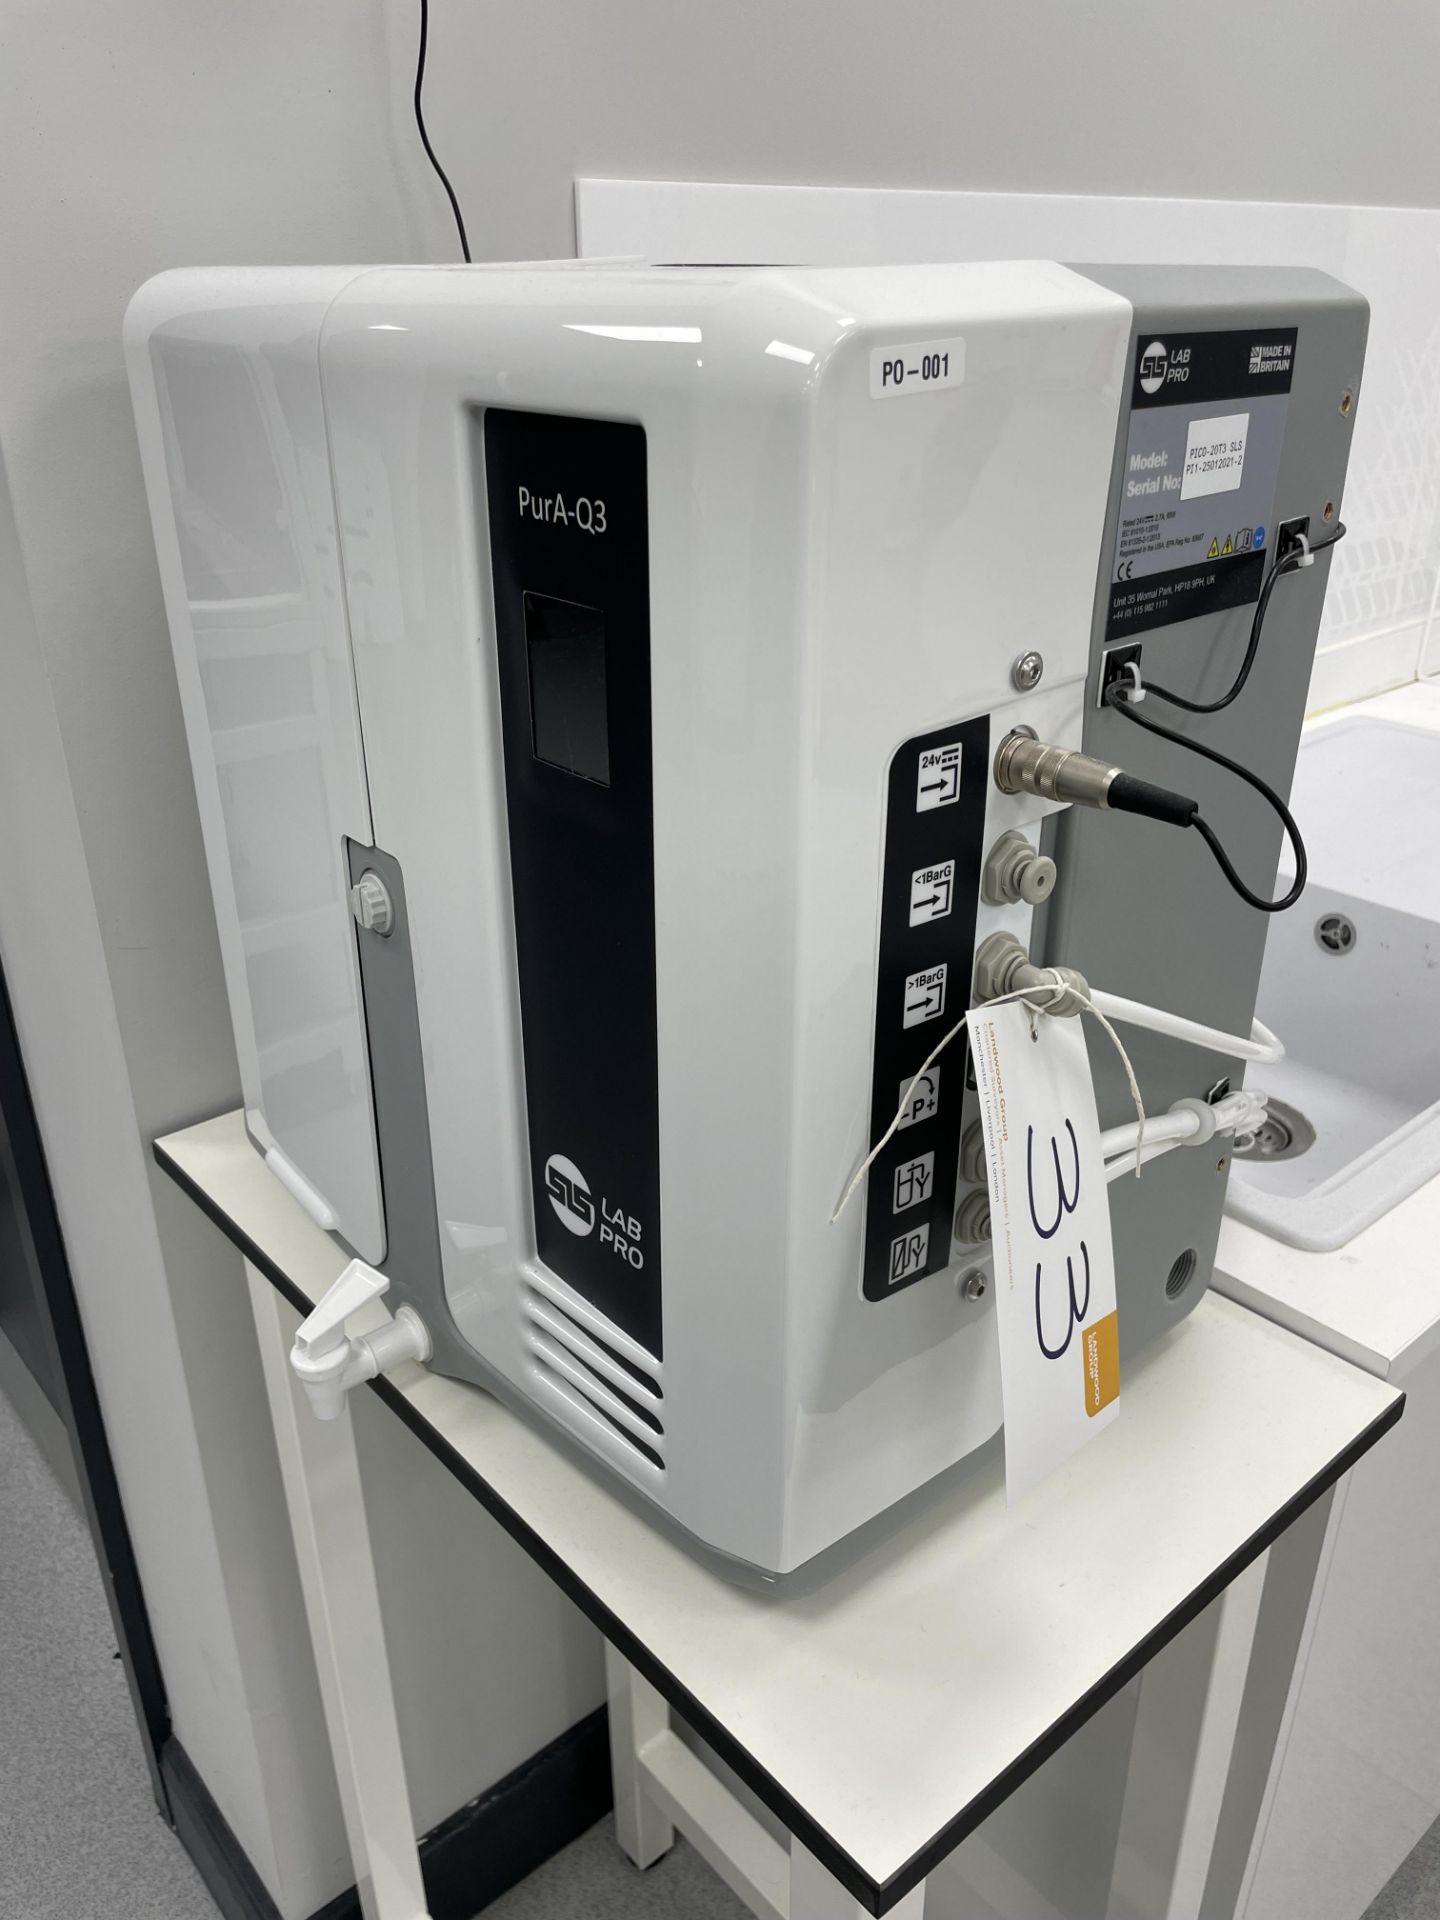 A SLS Lab Pro PurA-Q3 model PICO-20T3 SLS water purifier no: PI1-25012021-2 on laboratory bench 62cm